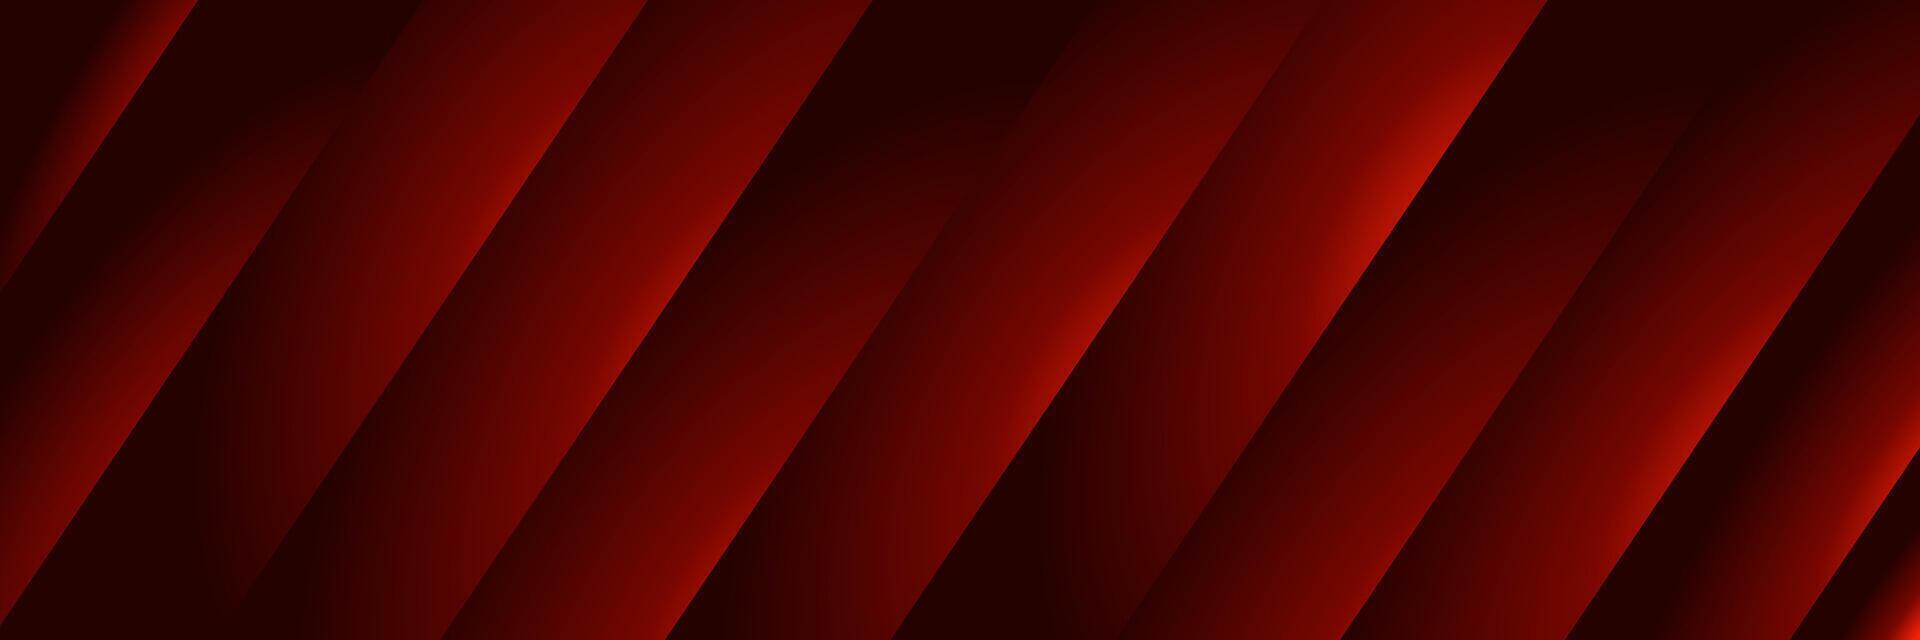 abstrakt dunkel rot elegant korporativ Hintergrund vektor